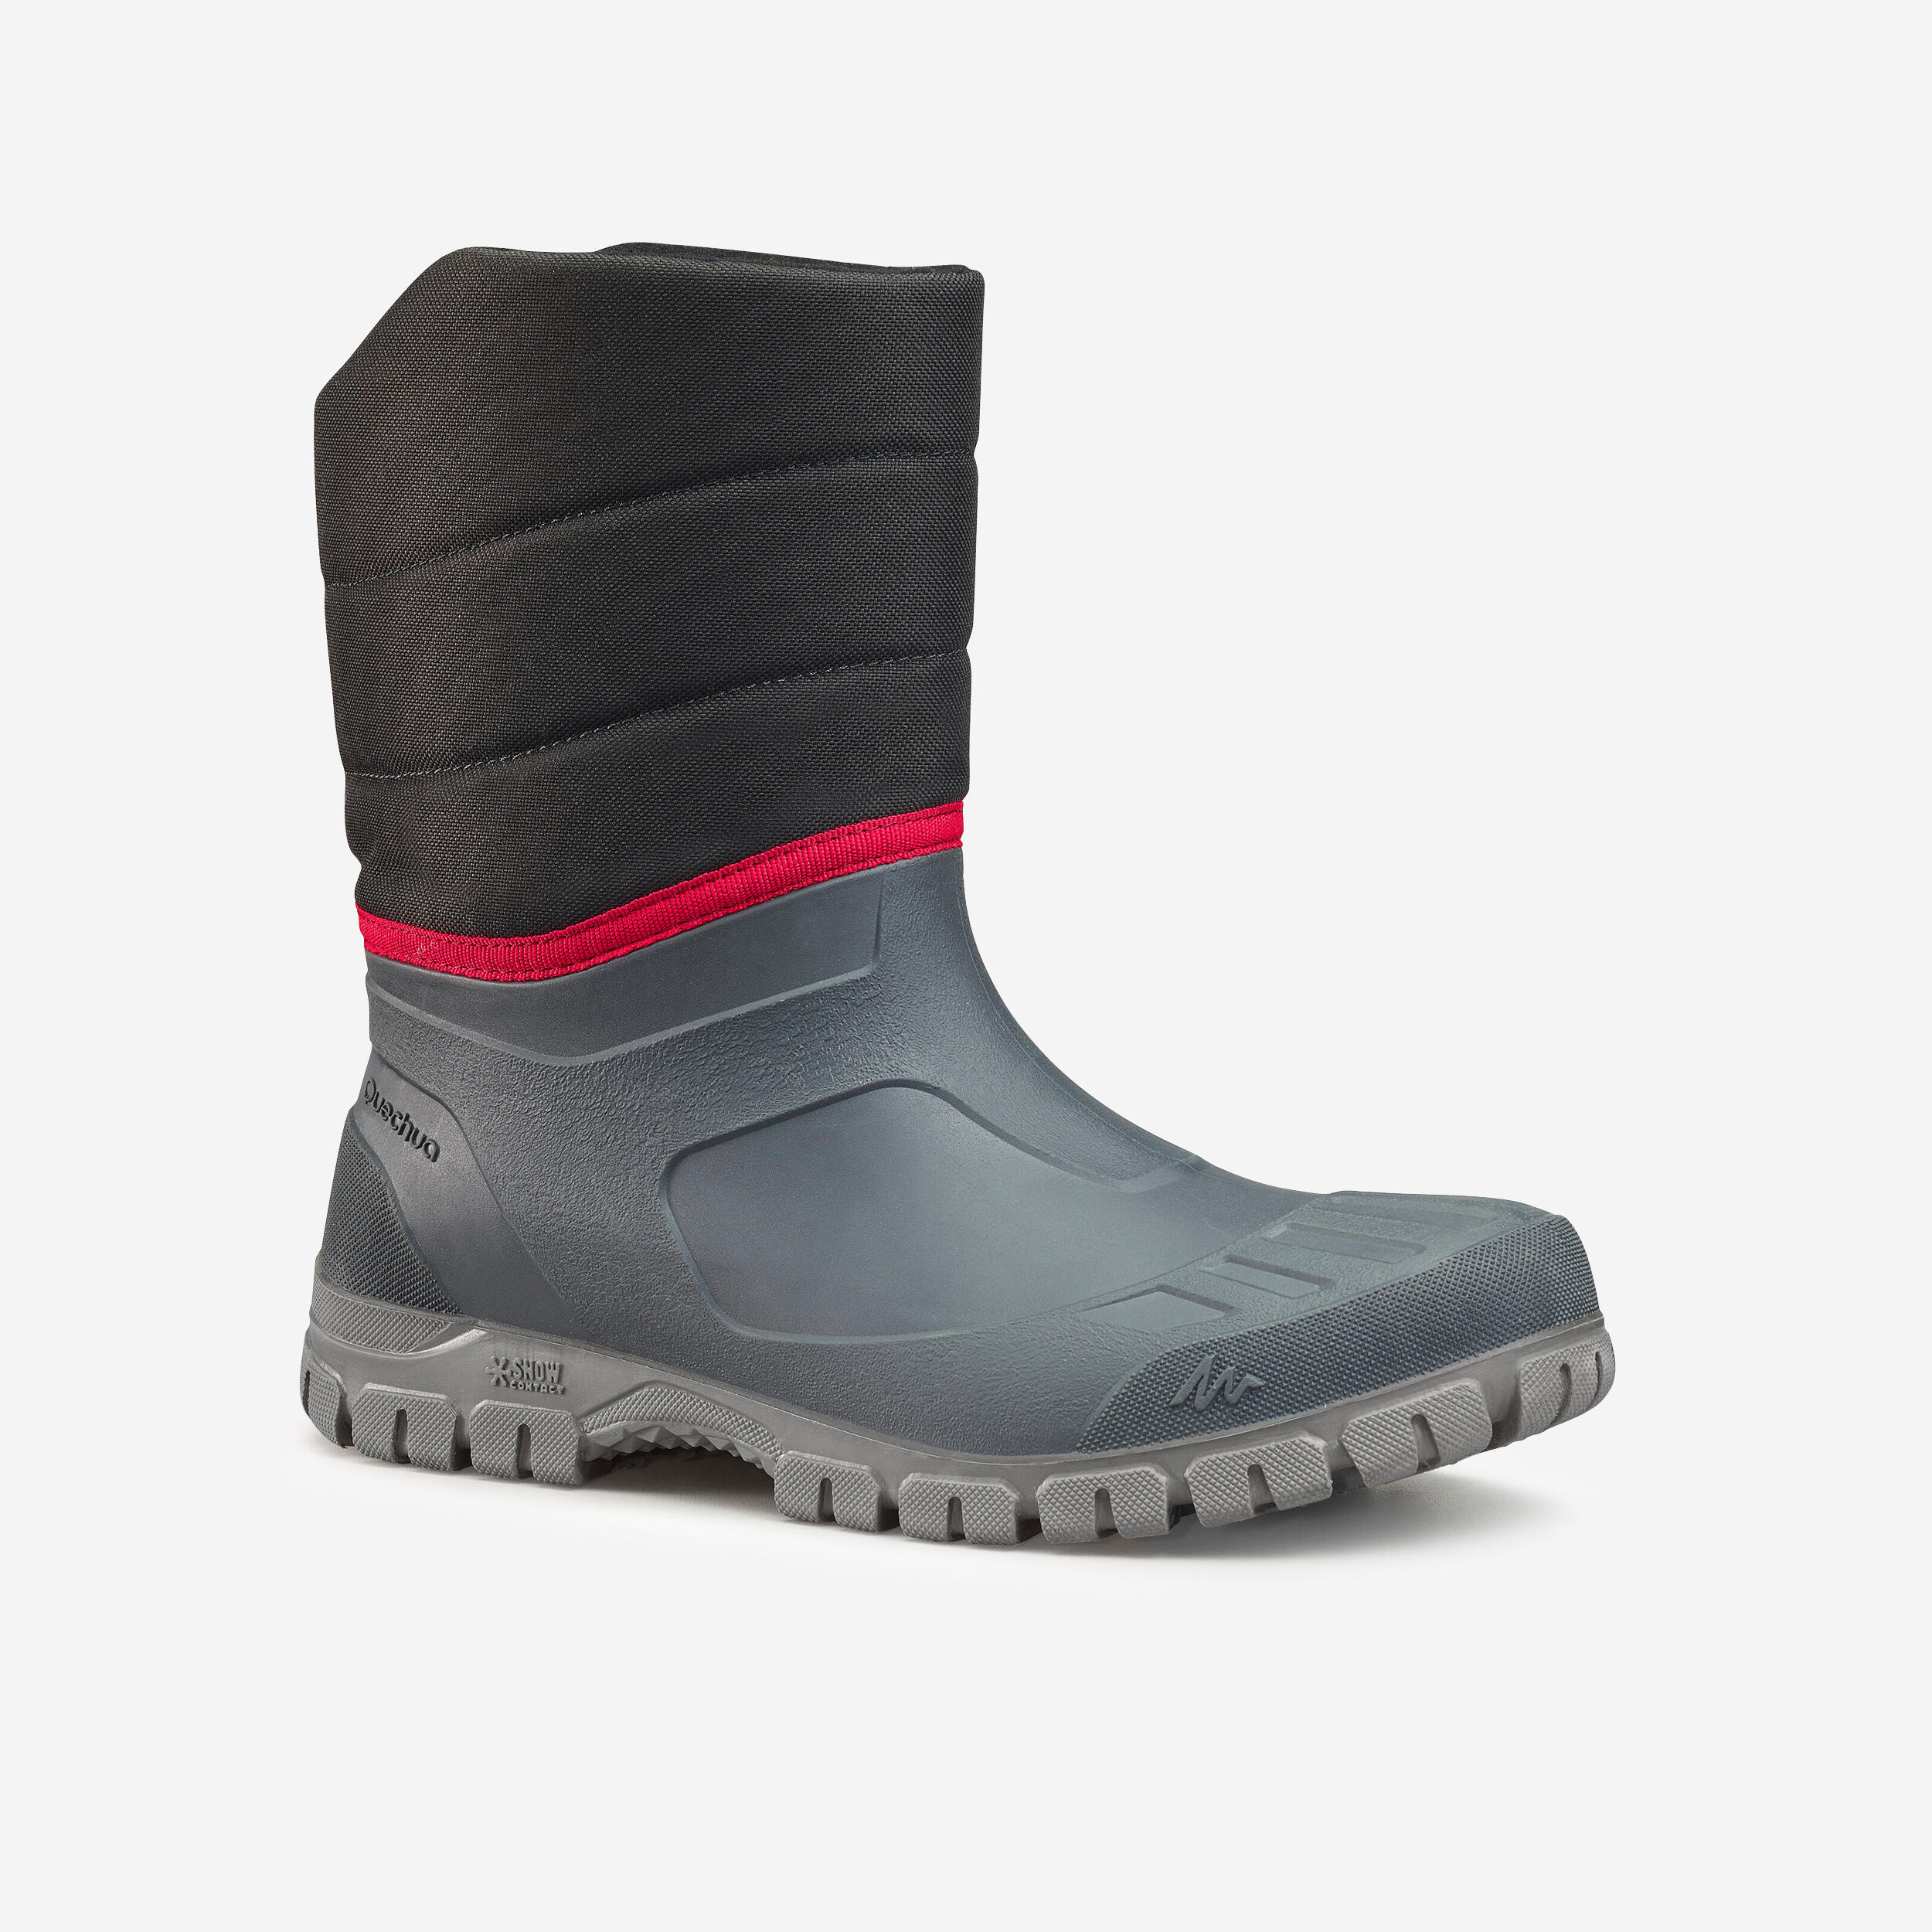 QUECHUA Men’s Warm Waterproof Snow Boots - SH100  